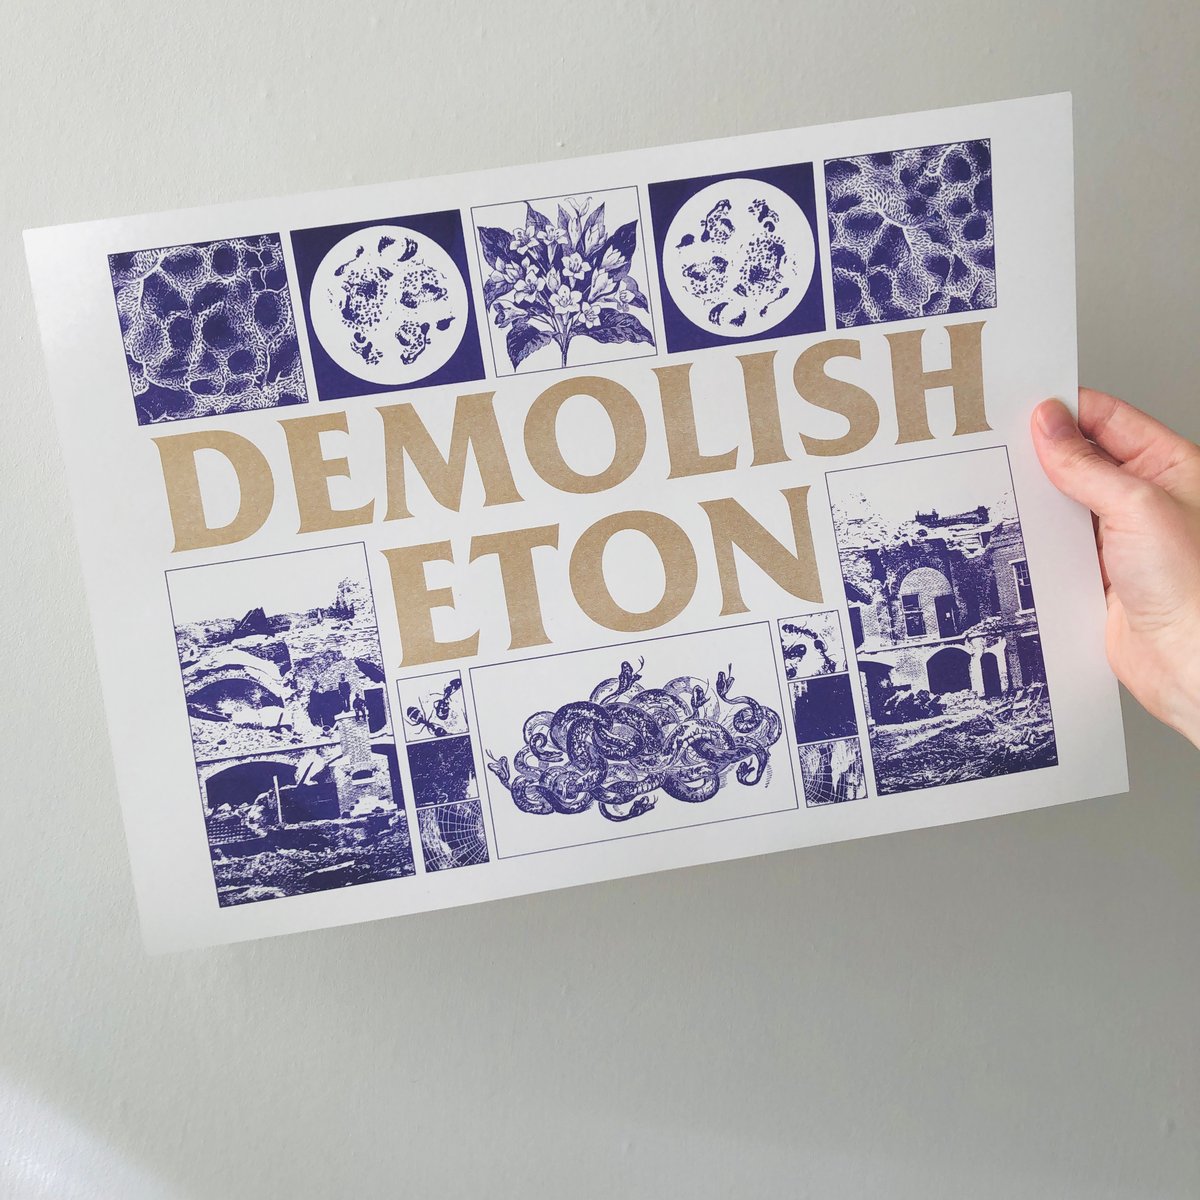 Image of DEMOLISH ETON A3 riso print